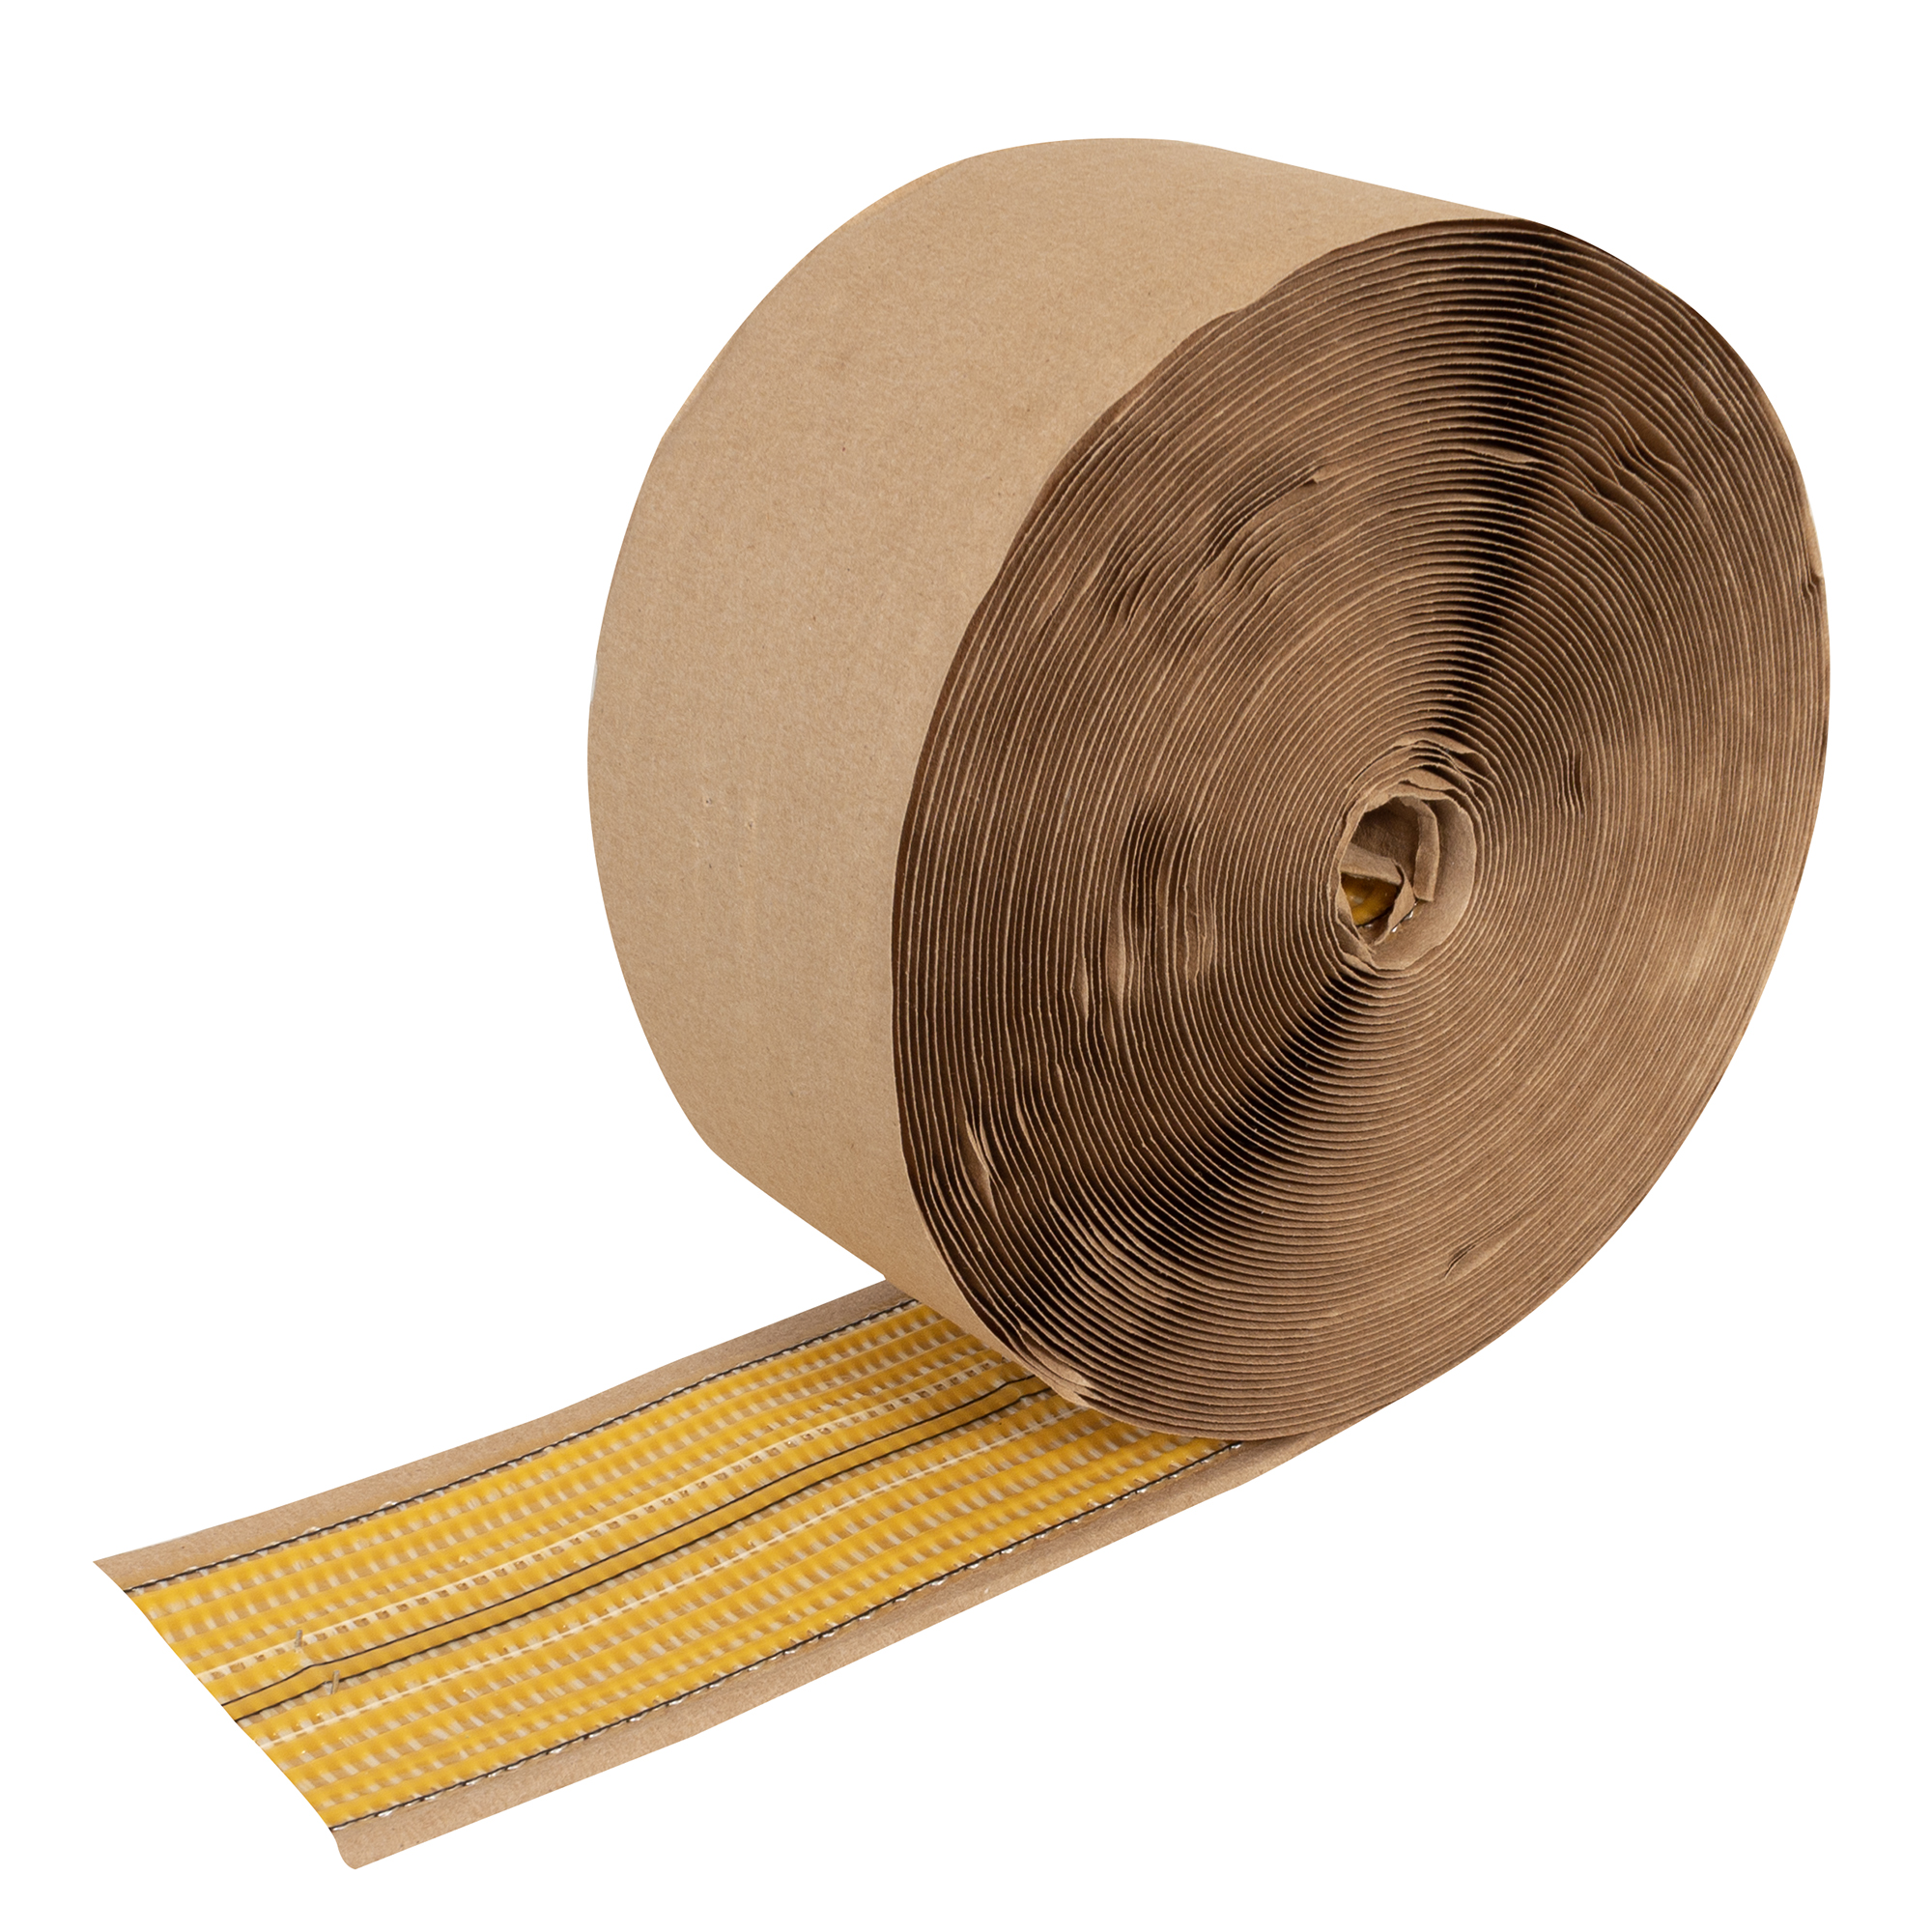 NEW Bond's Carpet Seam tape #B-40 - Bond Products Inc